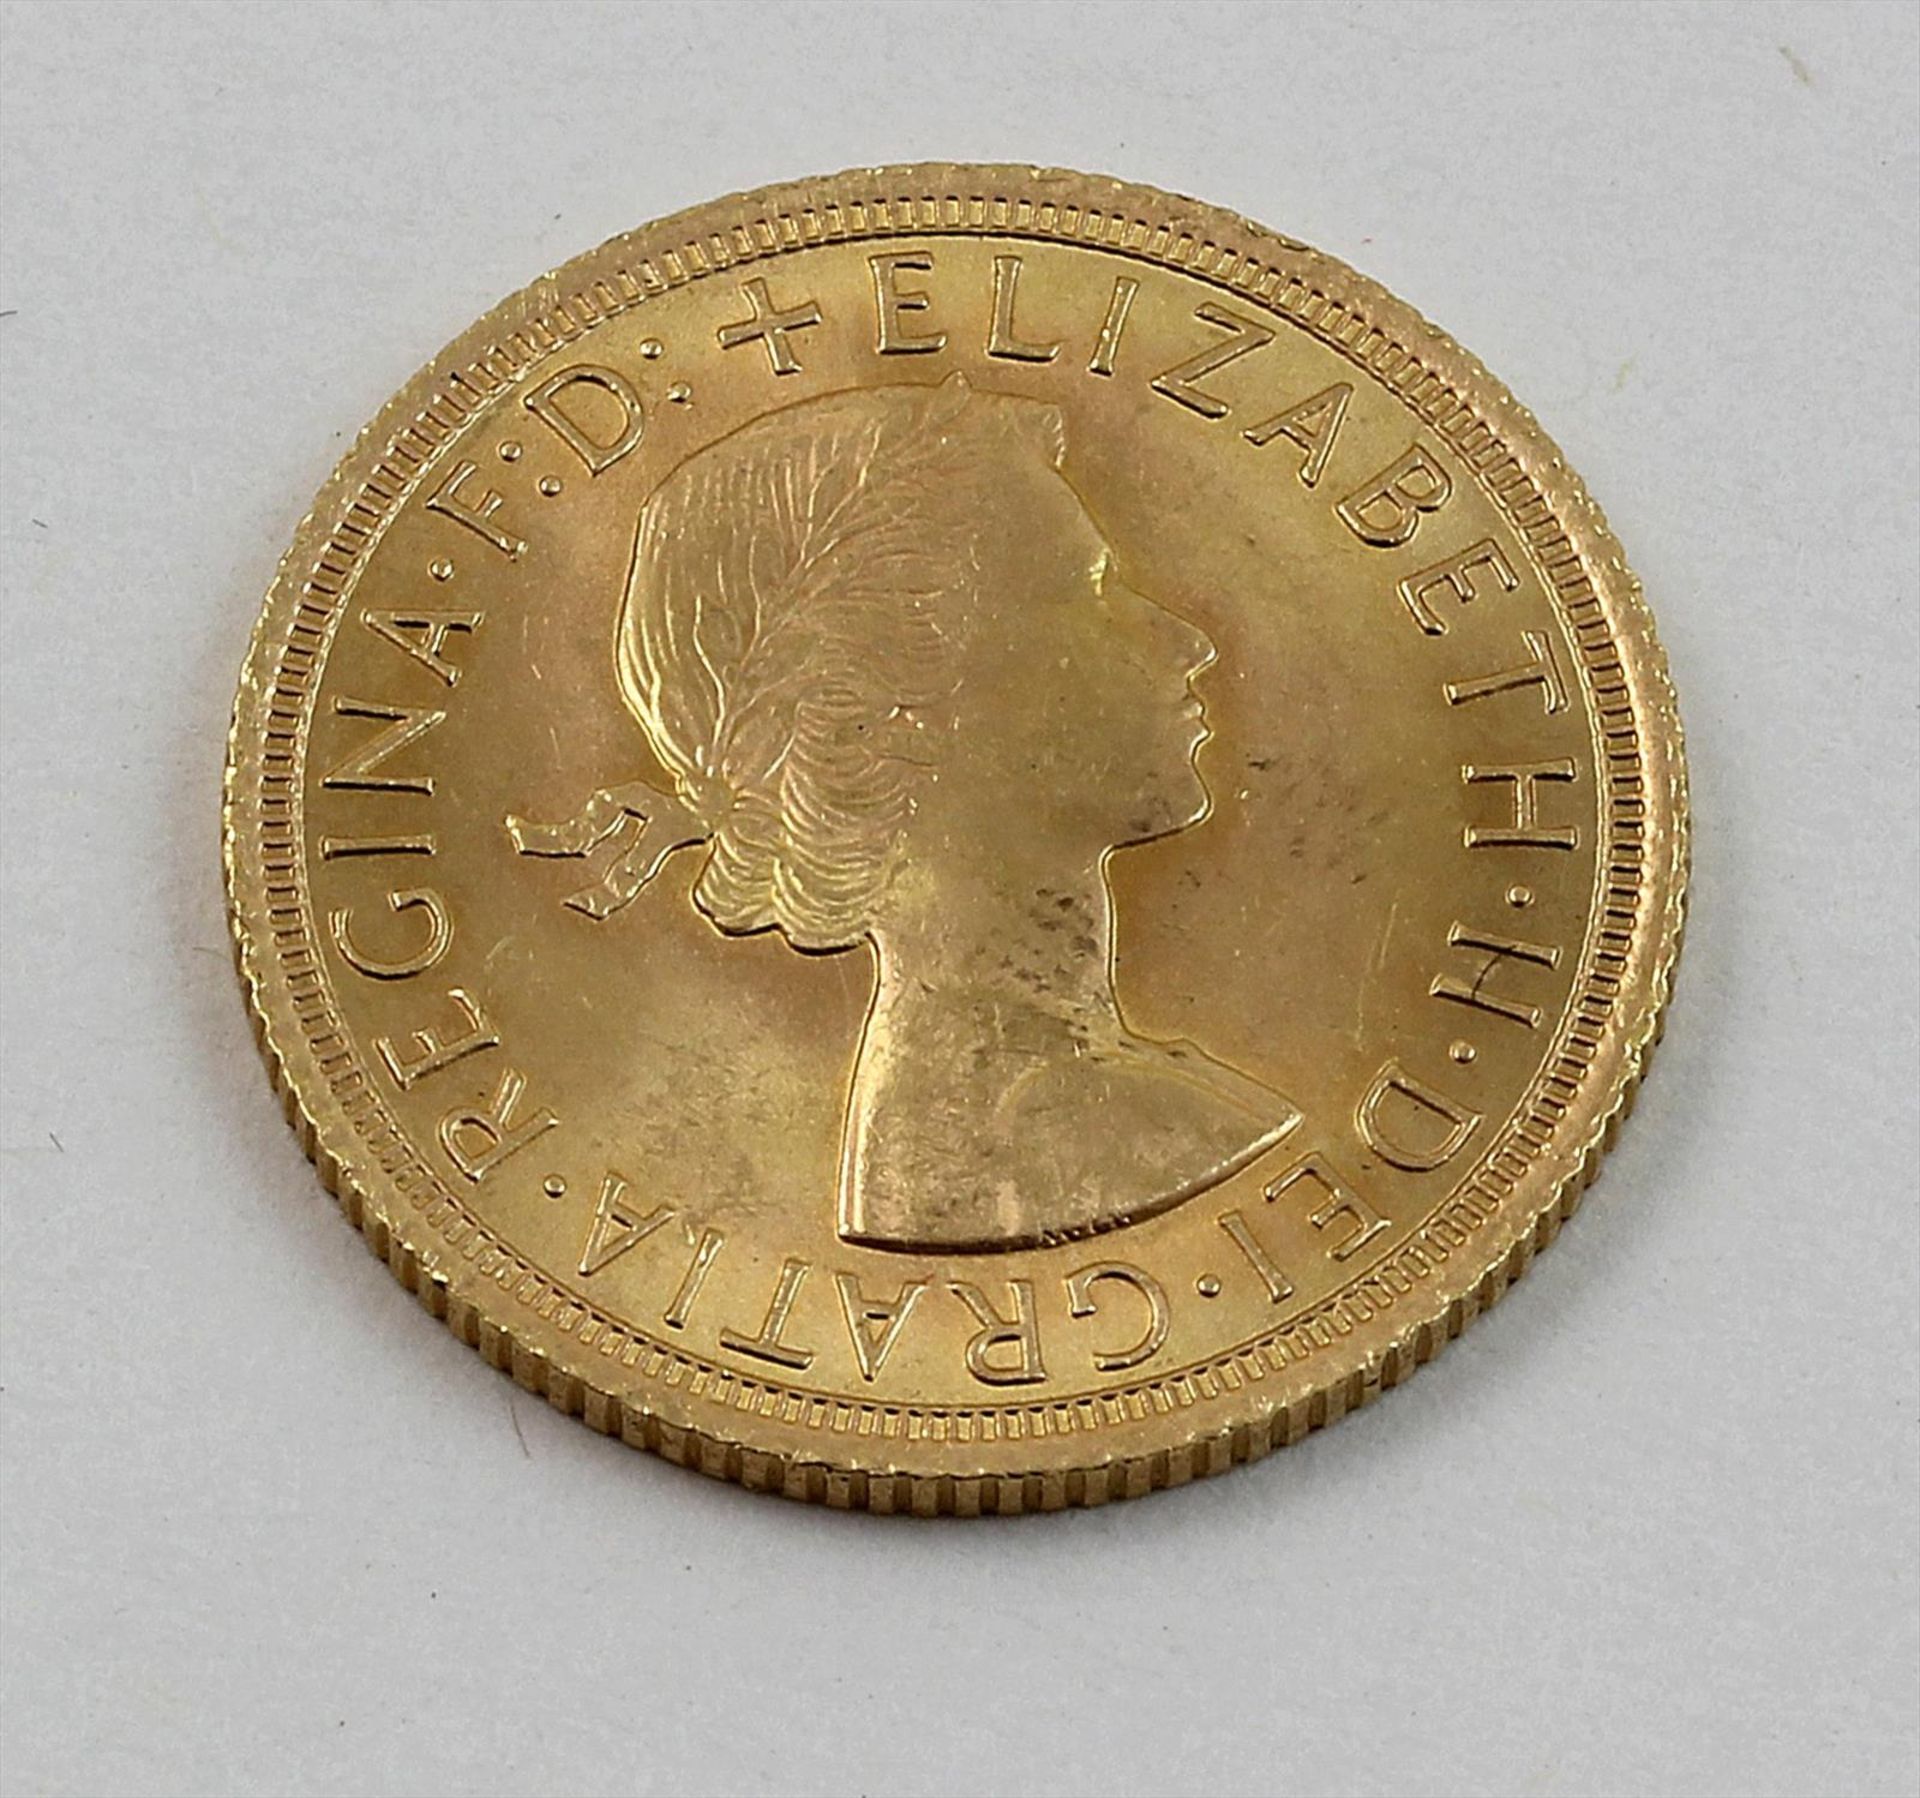 Goldmünze, England, Elisabeth II, 1 Sovereign 1966.916/000 GG, 7,99 g. ss.